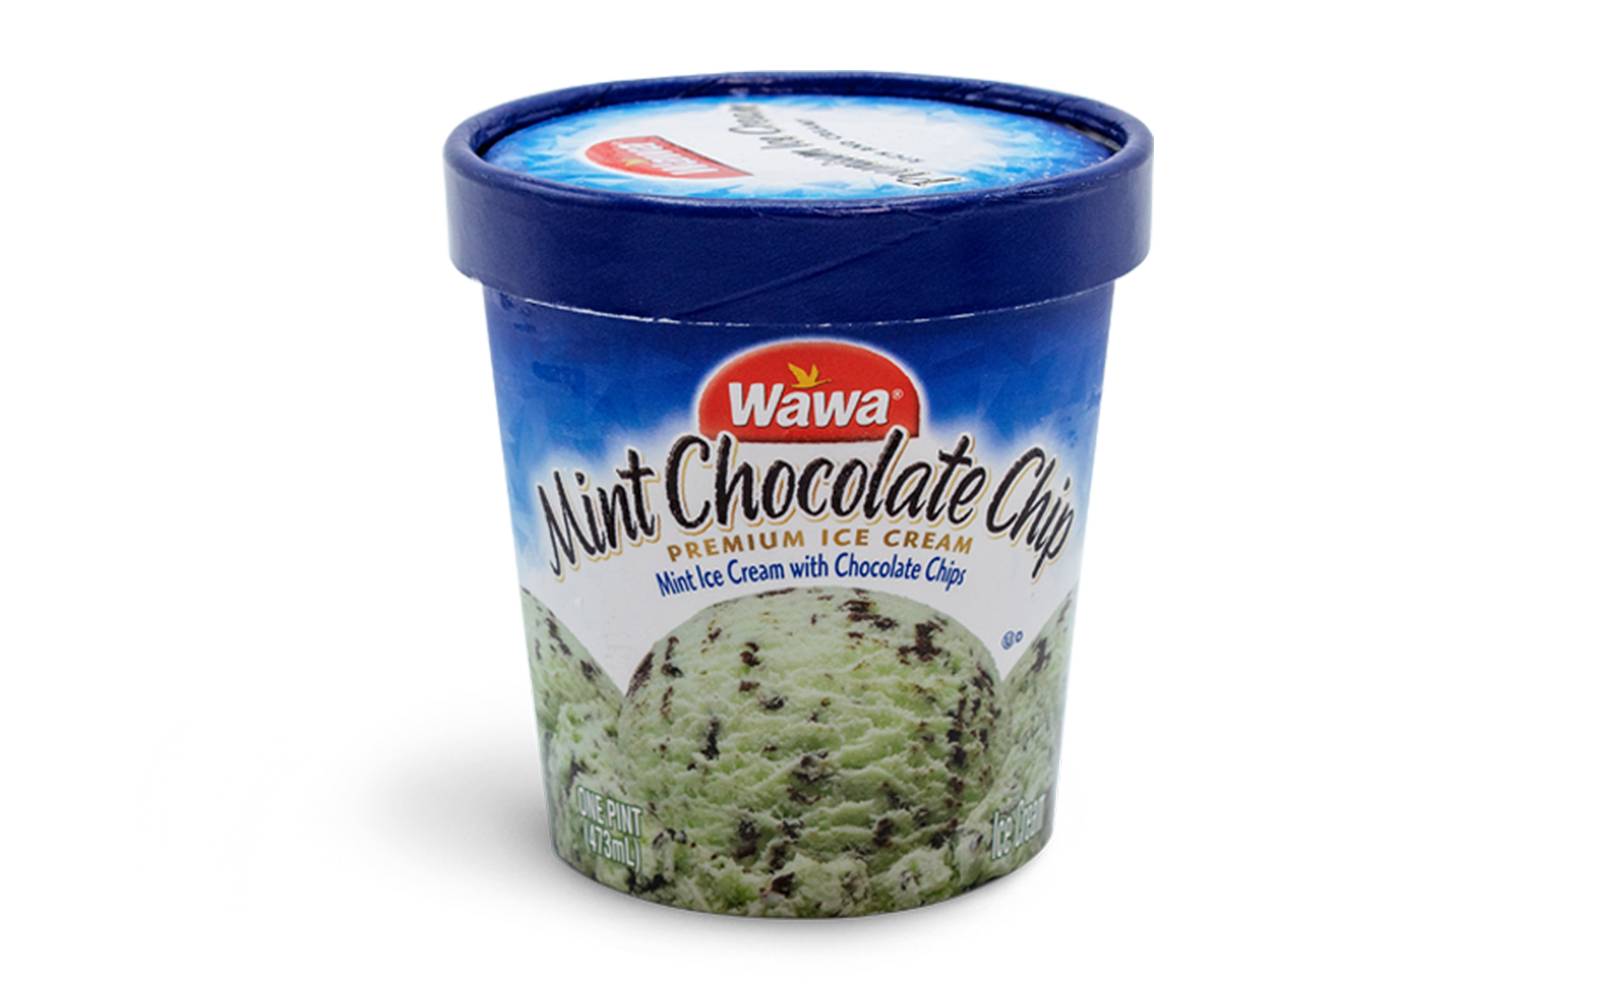 Wawa Ice Cream (mint chocolate chip)